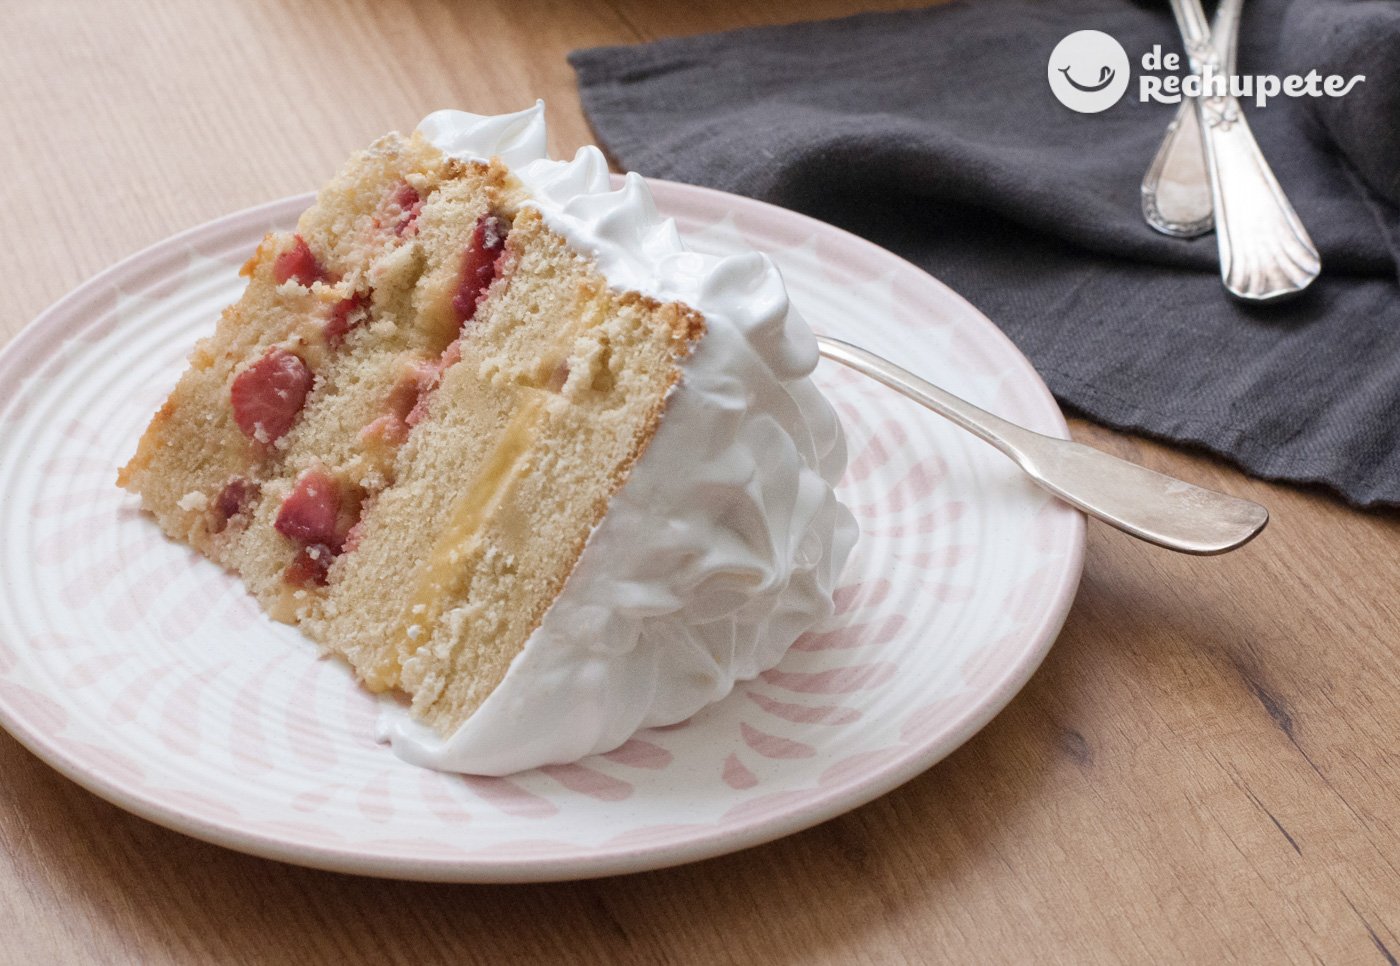 Tarta de merengue rellena de crema pastelera y fresas. La tarta de  cumpleaños perfecta - De Rechupete